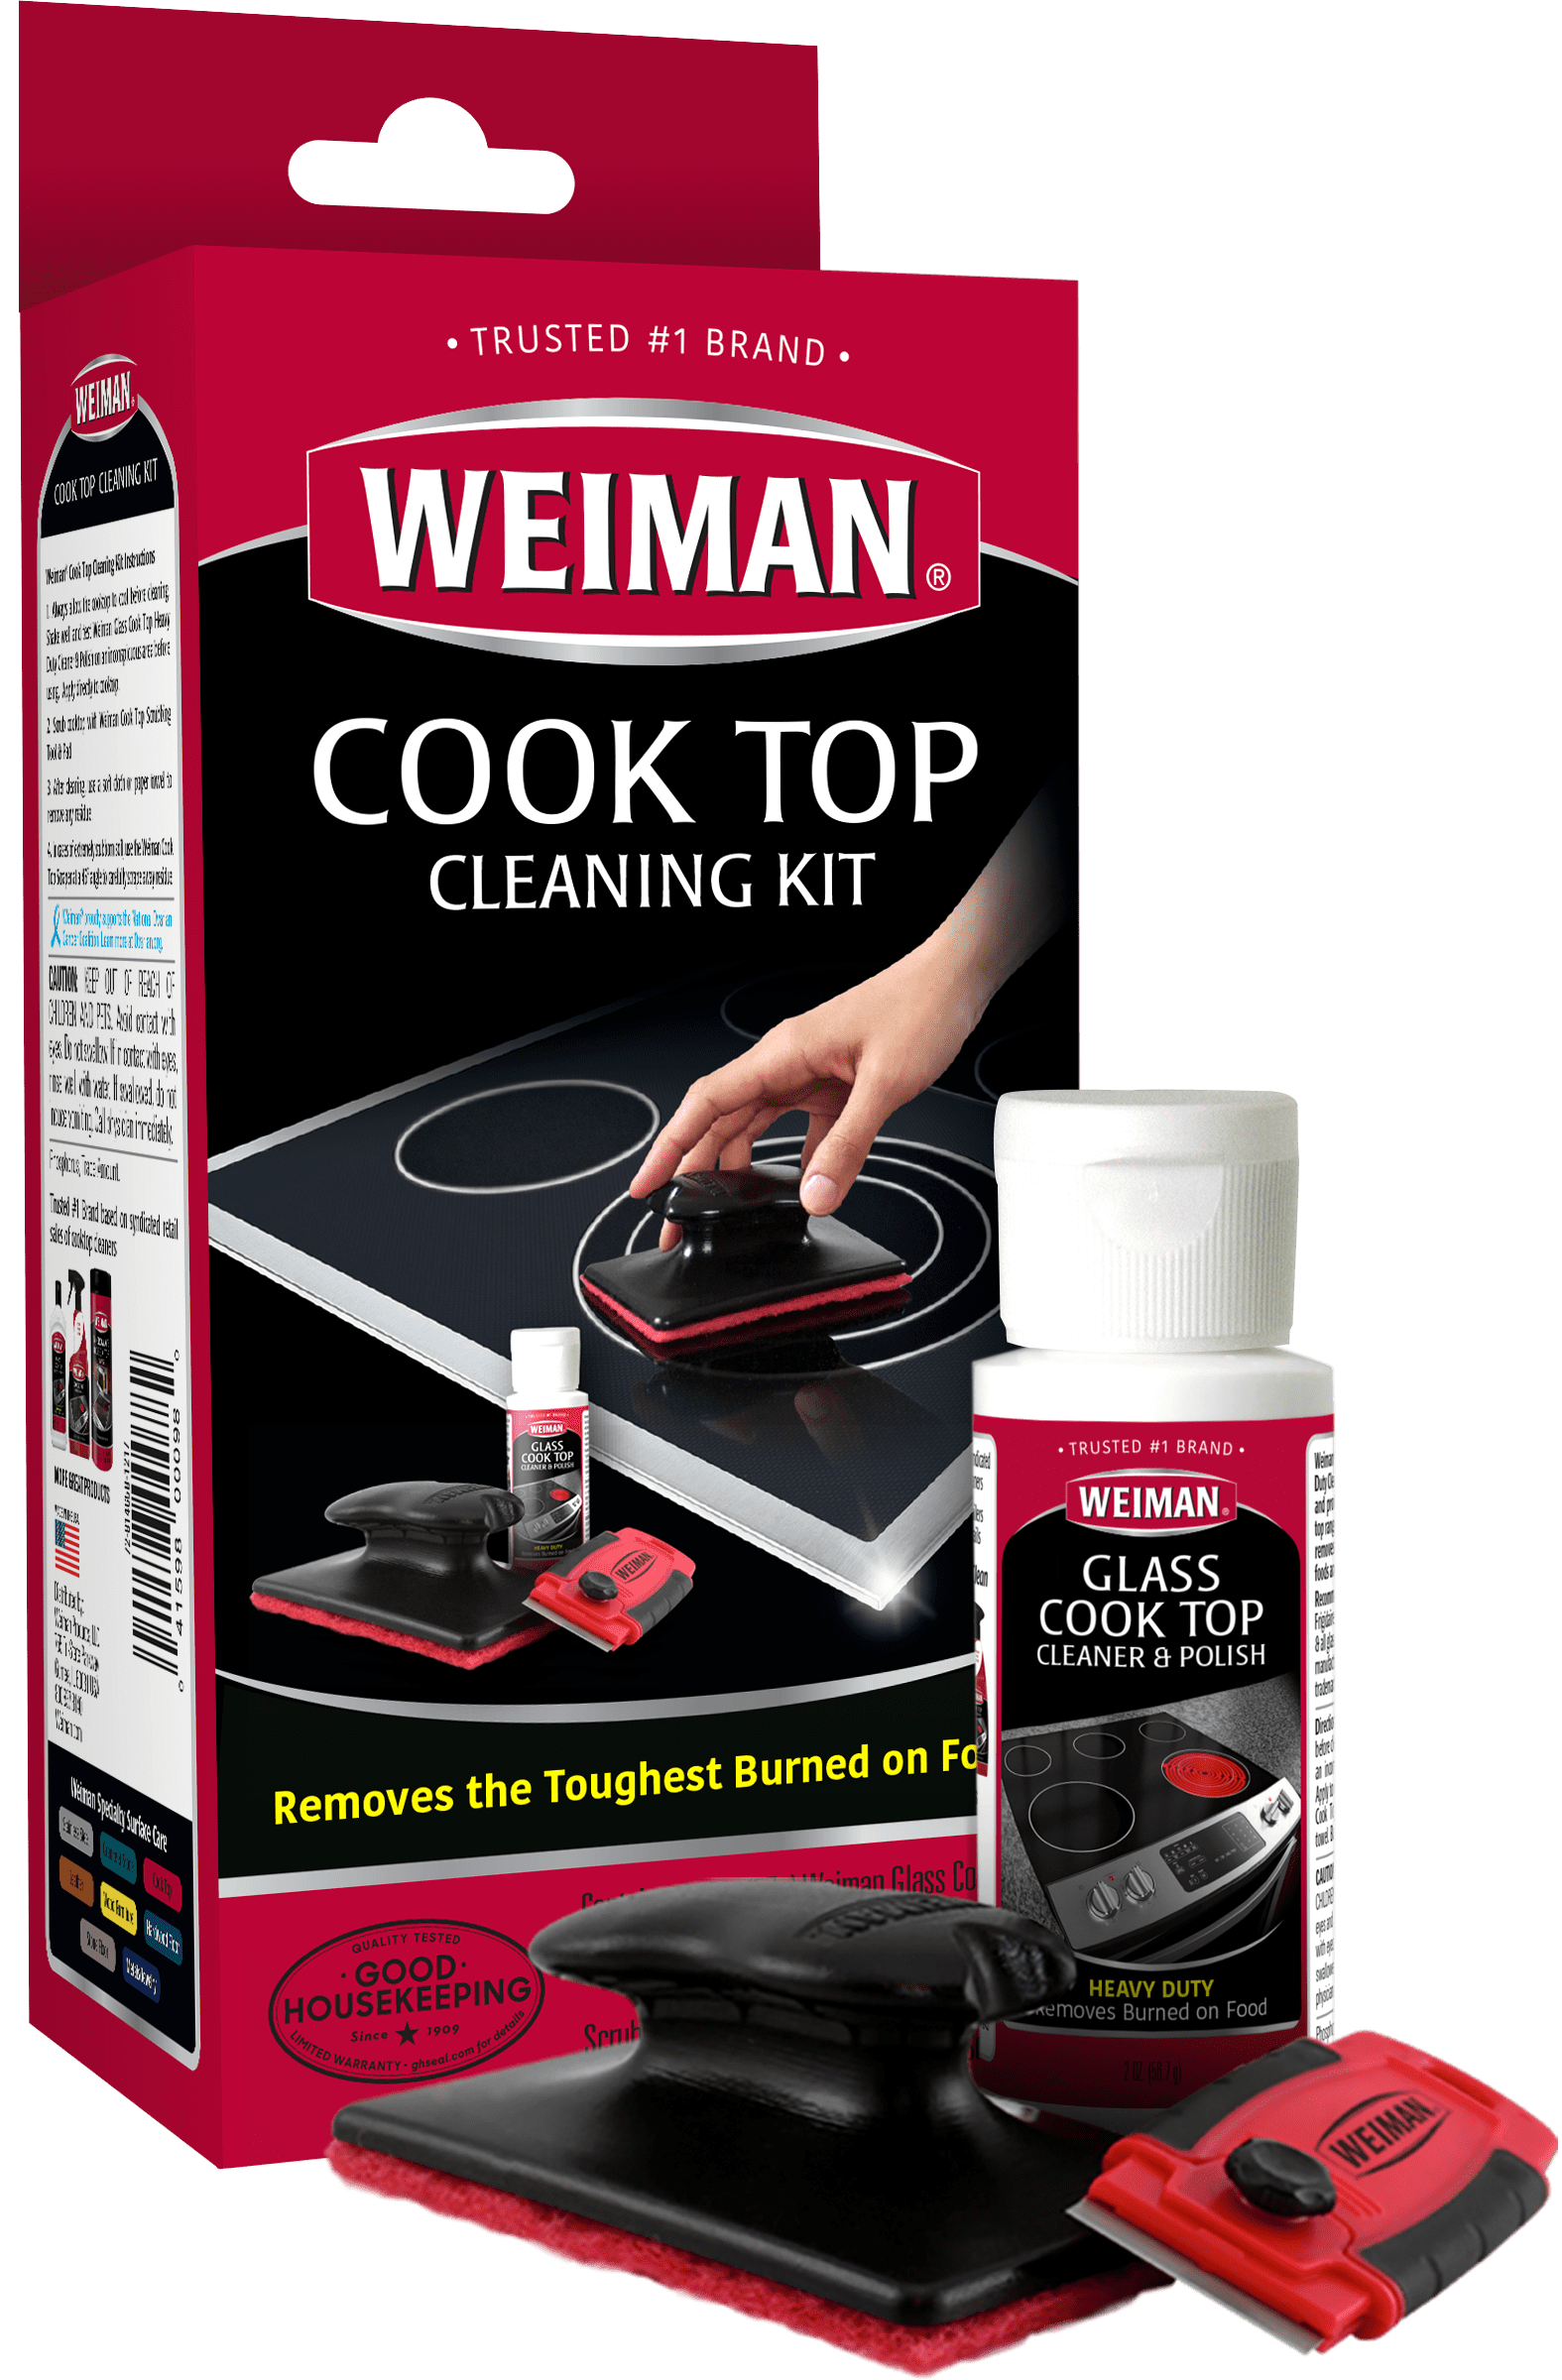 GE Cerama Bryte Complete Cooktop Cleaning Kit